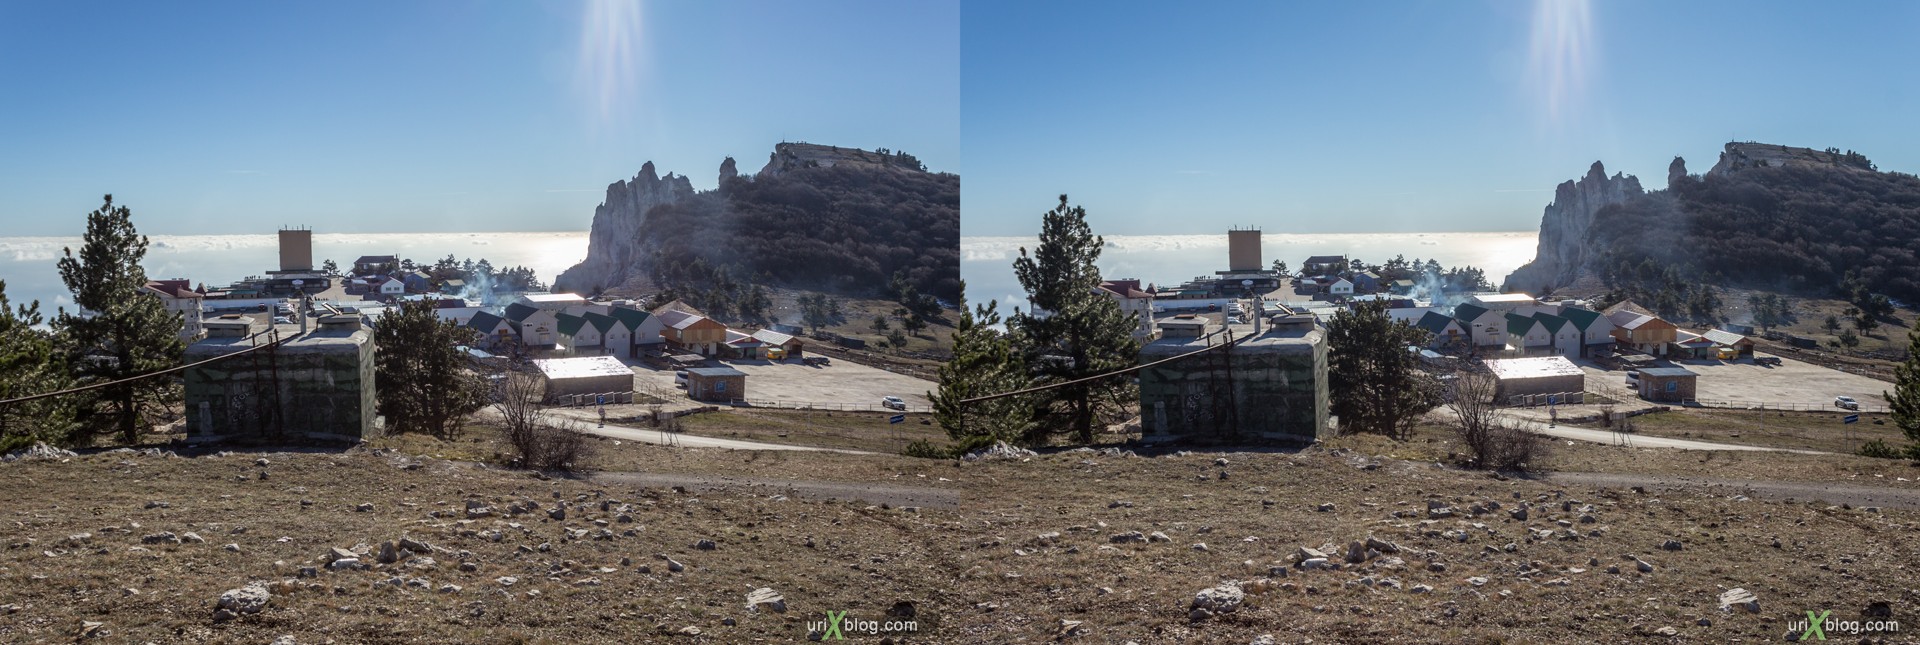 2012, Ai-Petri, mountains, Crimea, Russia, Ukraine, winter, 3D, stereo pair, cross-eyed, crossview, cross view stereo pair, stereoscopic